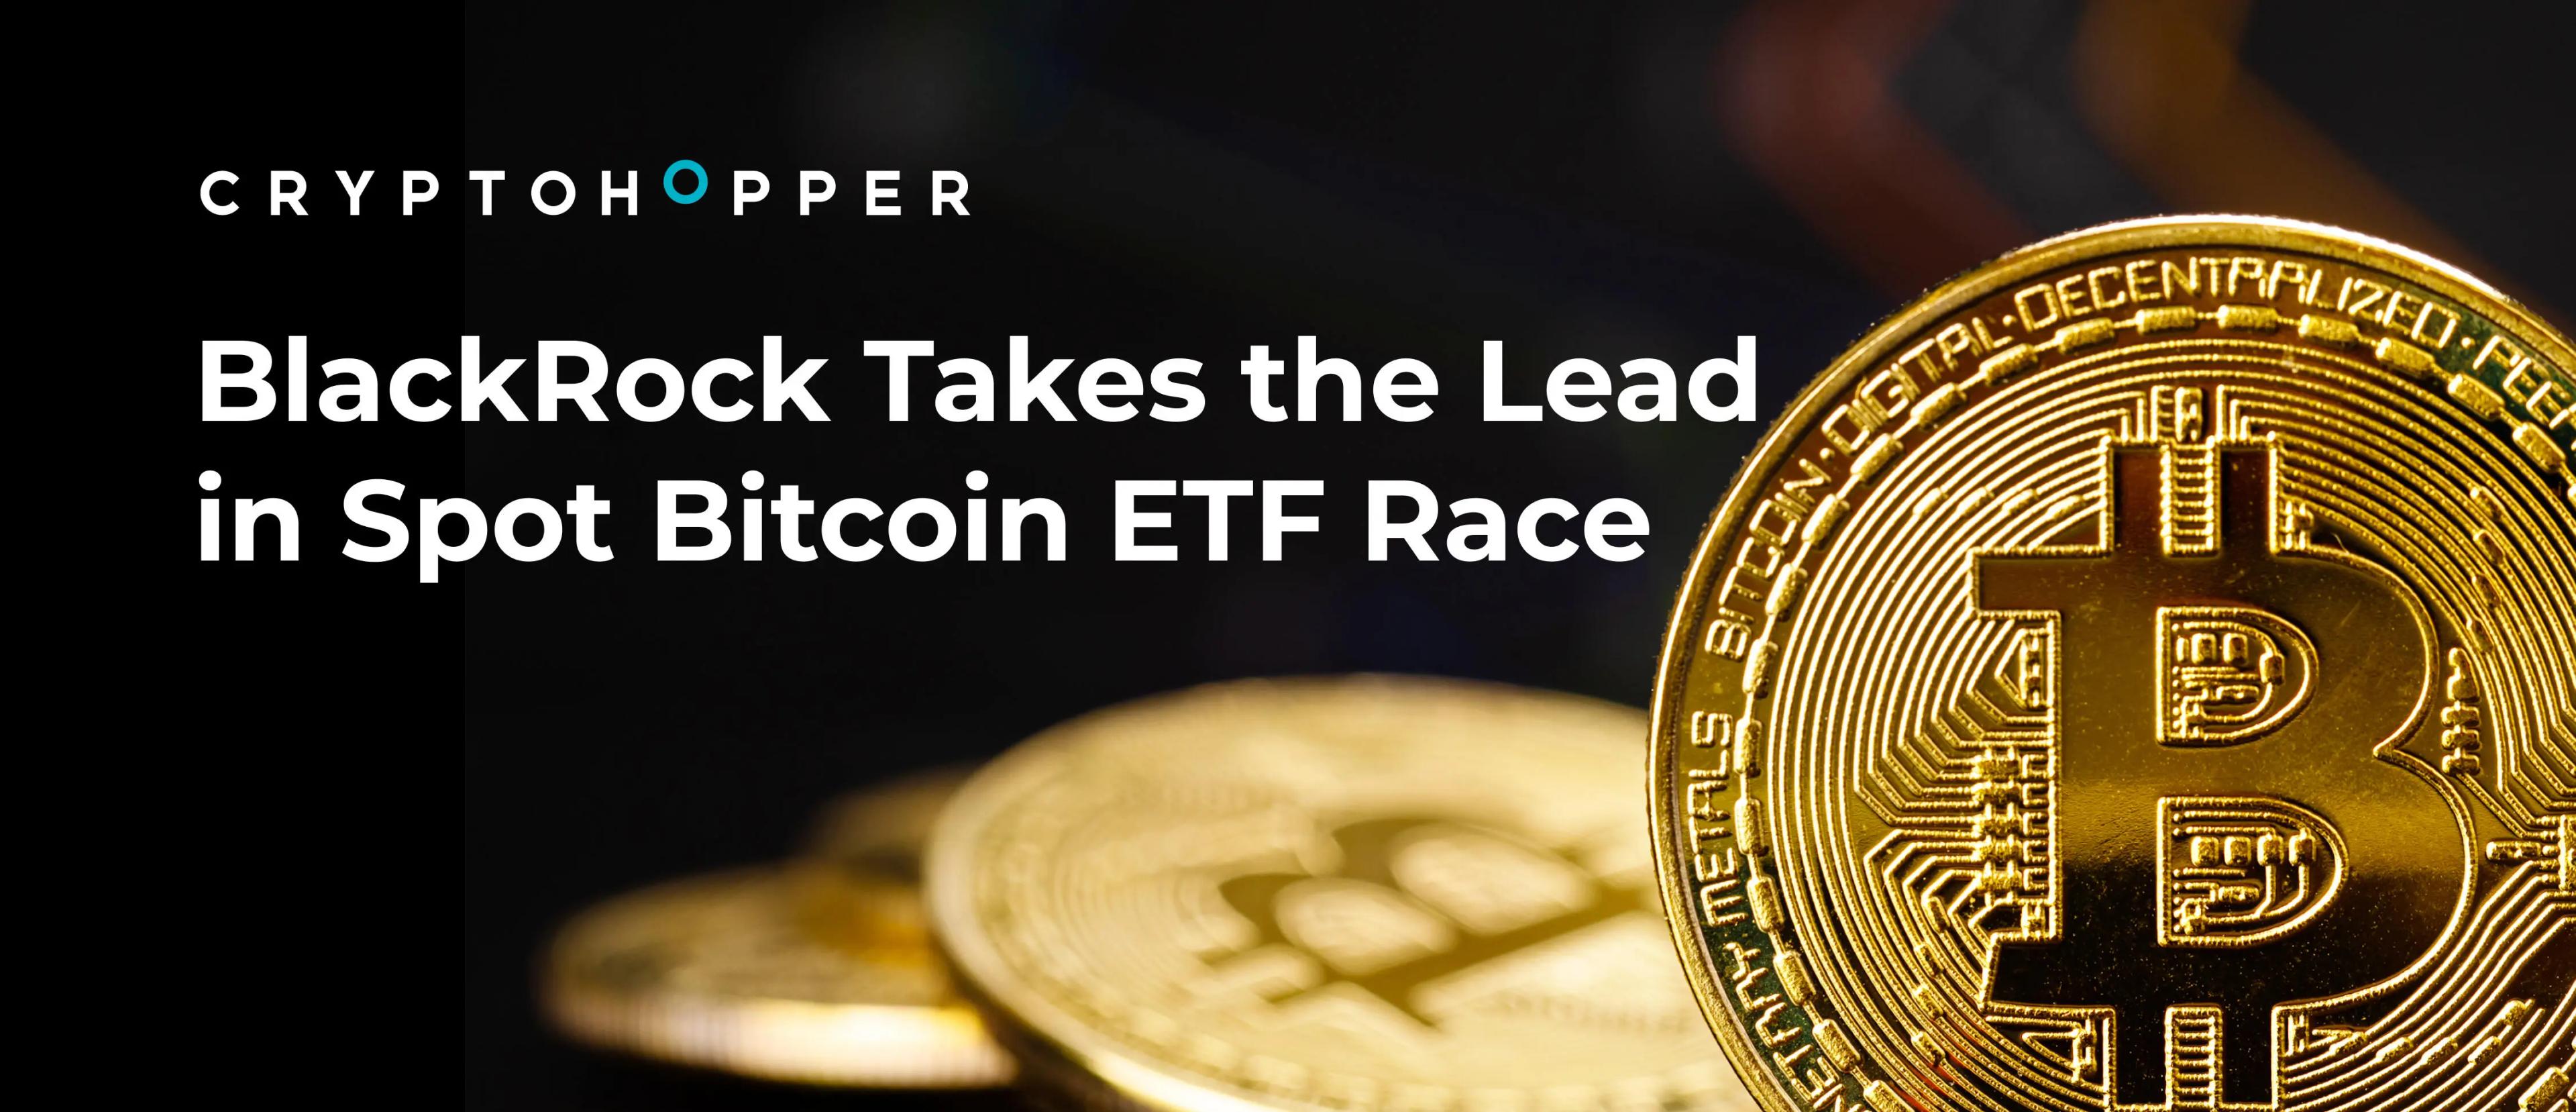 BlackRock Takes the Lead in Spot Bitcoin ETF Race